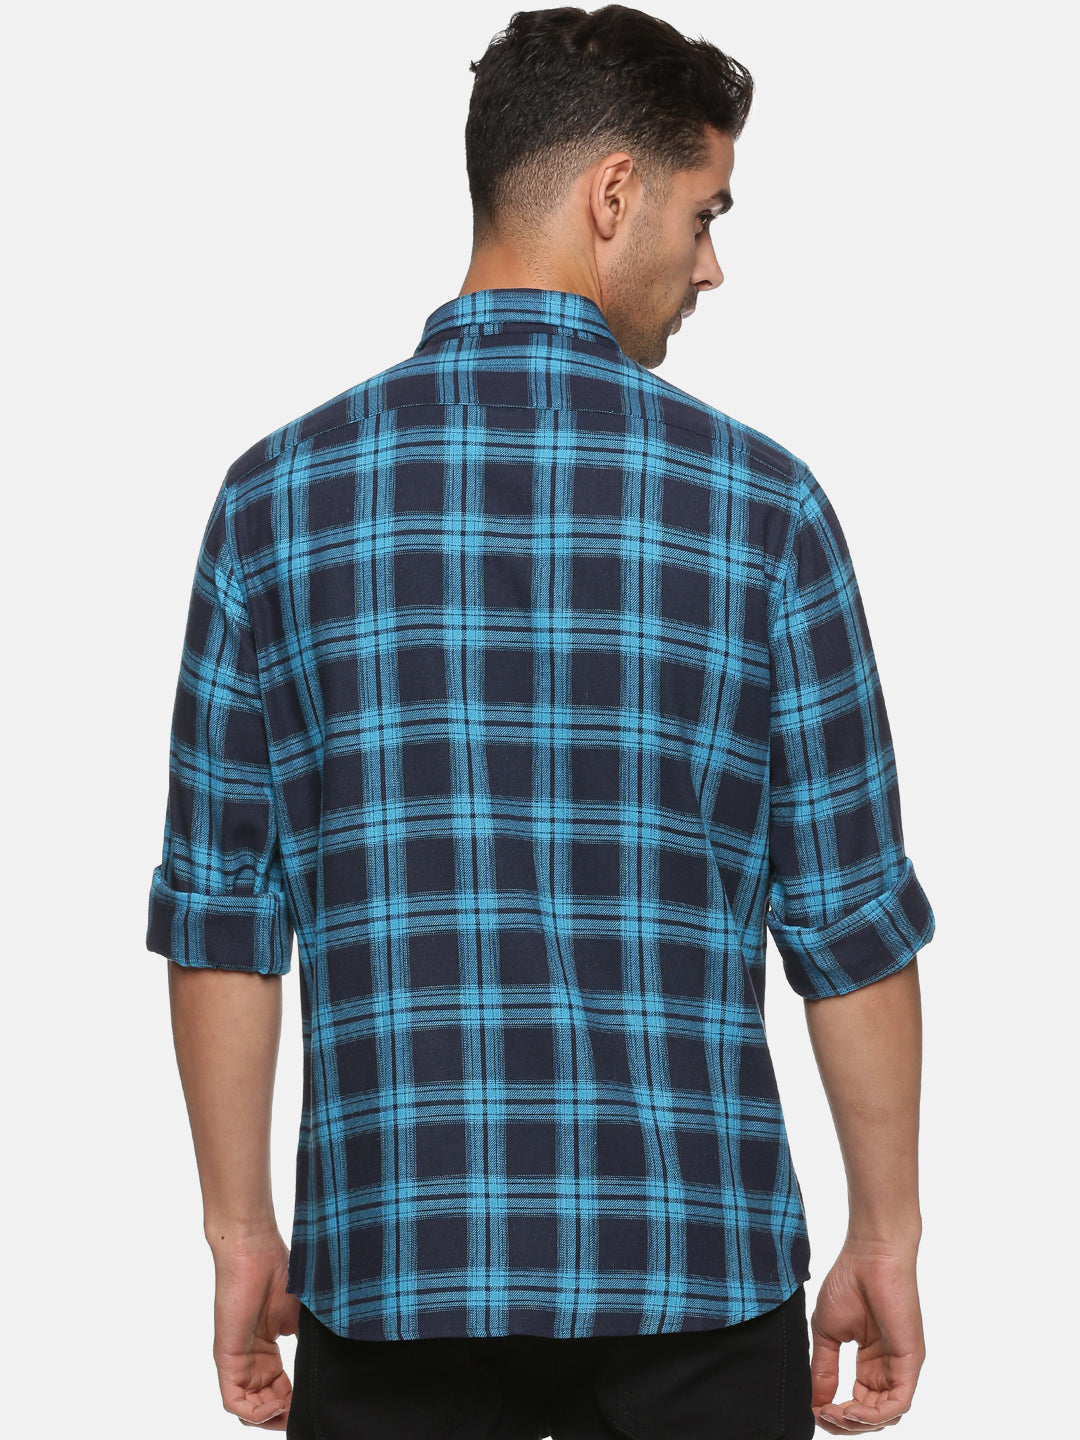 Men Blue & Black Checkered Slim Fit Casual Shirt, Men's Full Sleeve Cotton Shirt